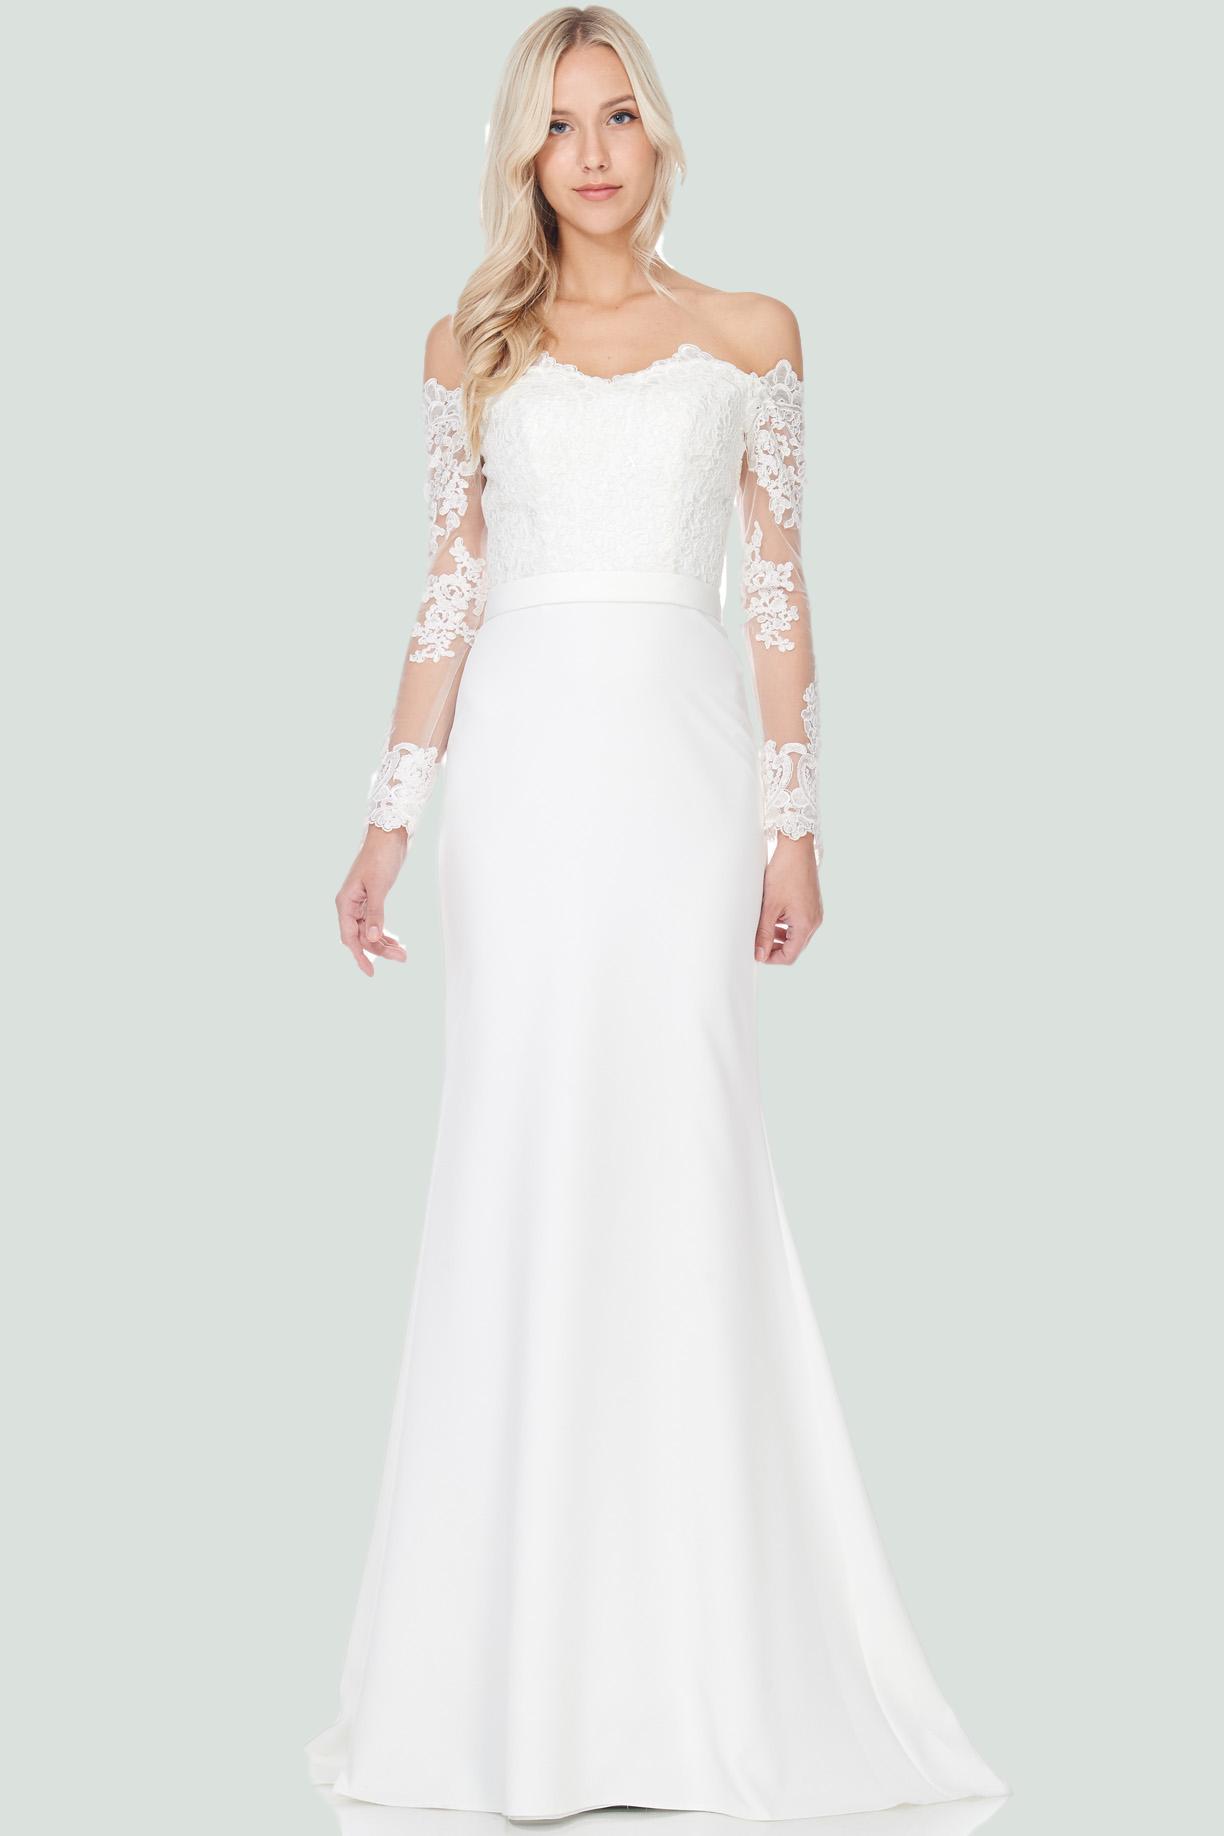 Elegant simple  long sleeve  lace wedding  dress  Simply Fab 